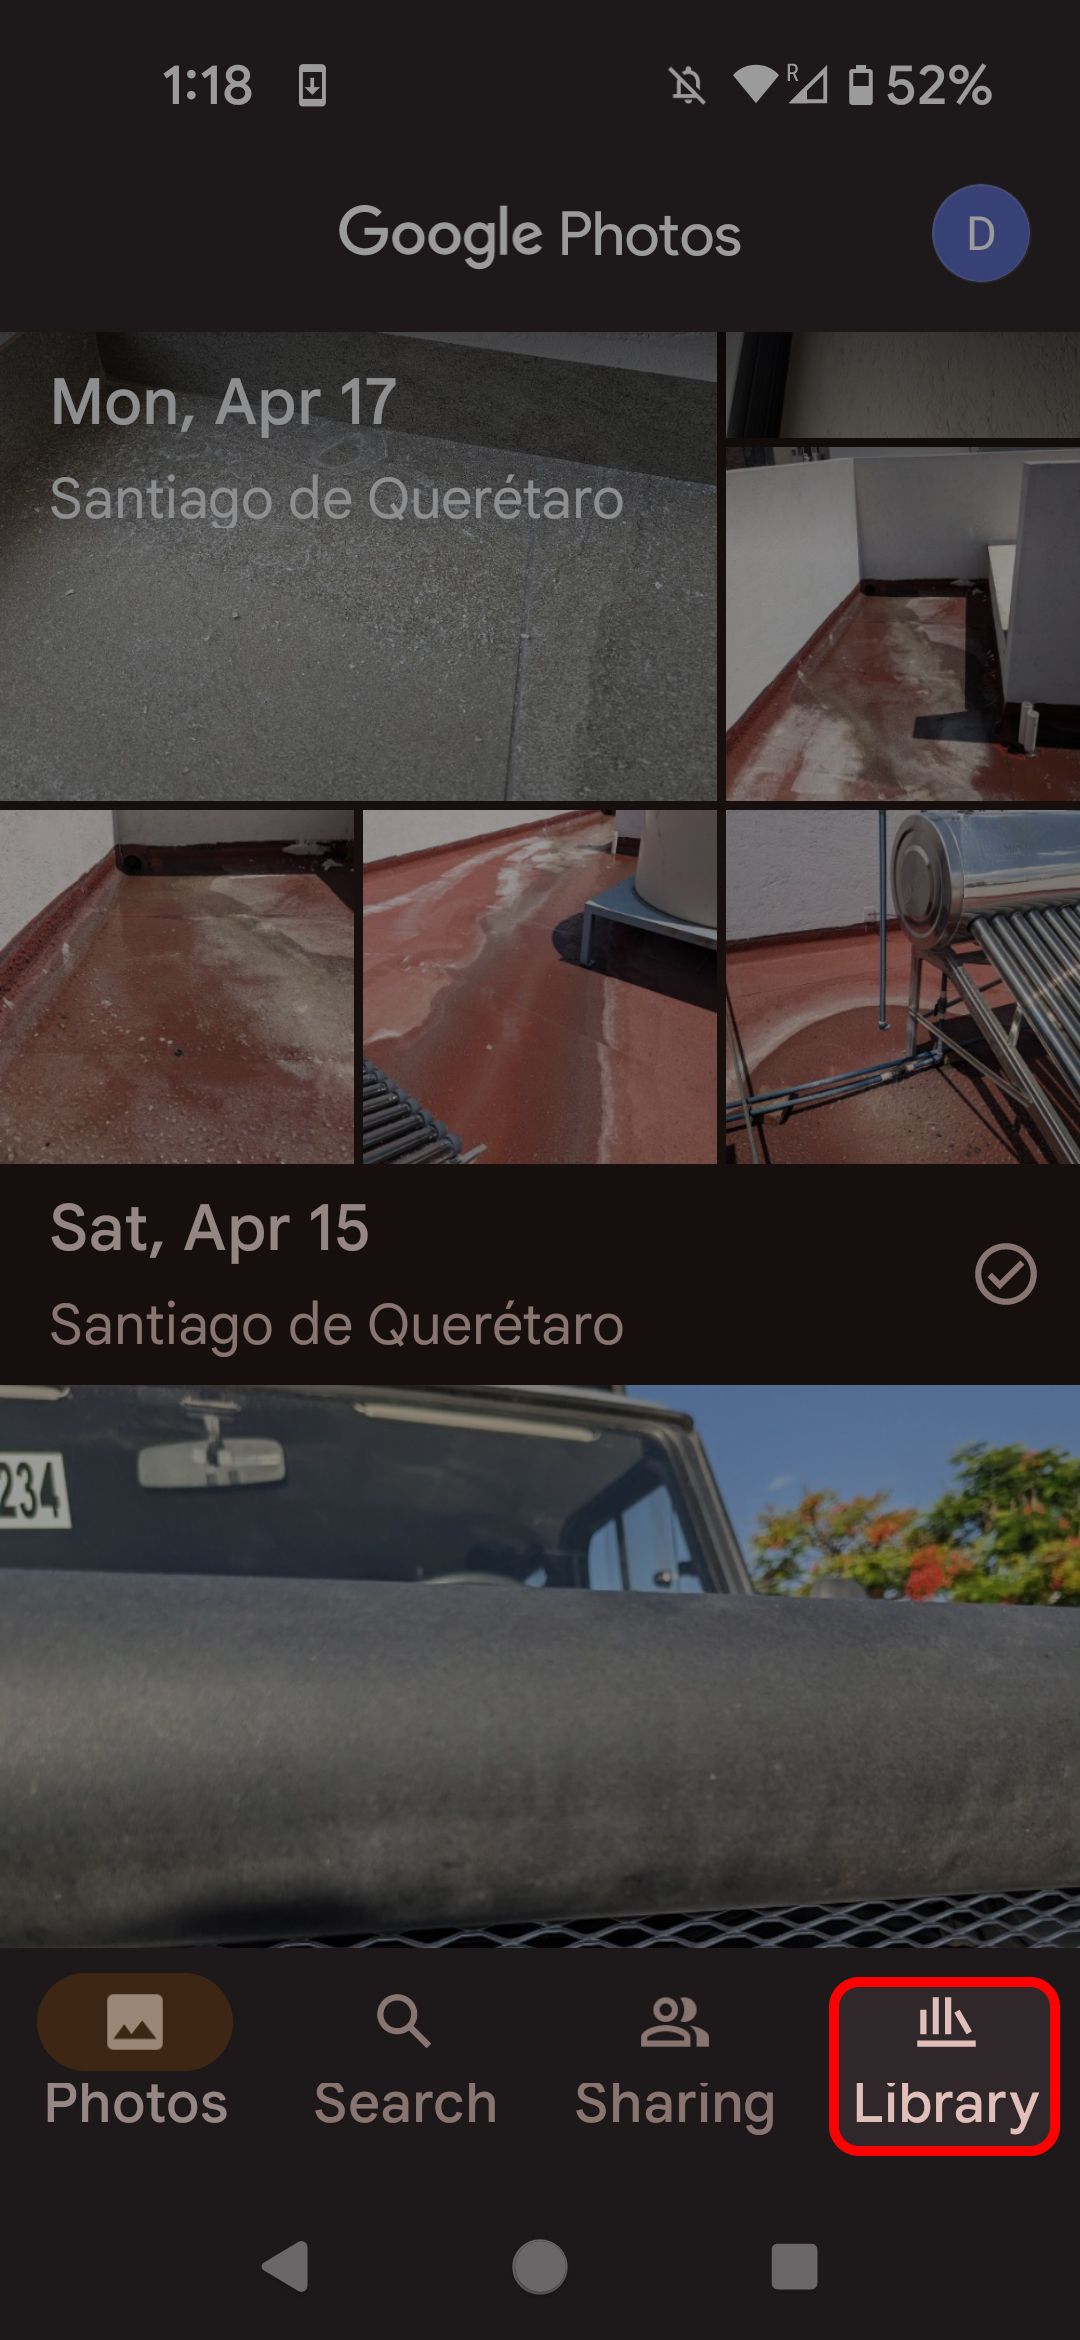 Photos menu on the Google Photos app